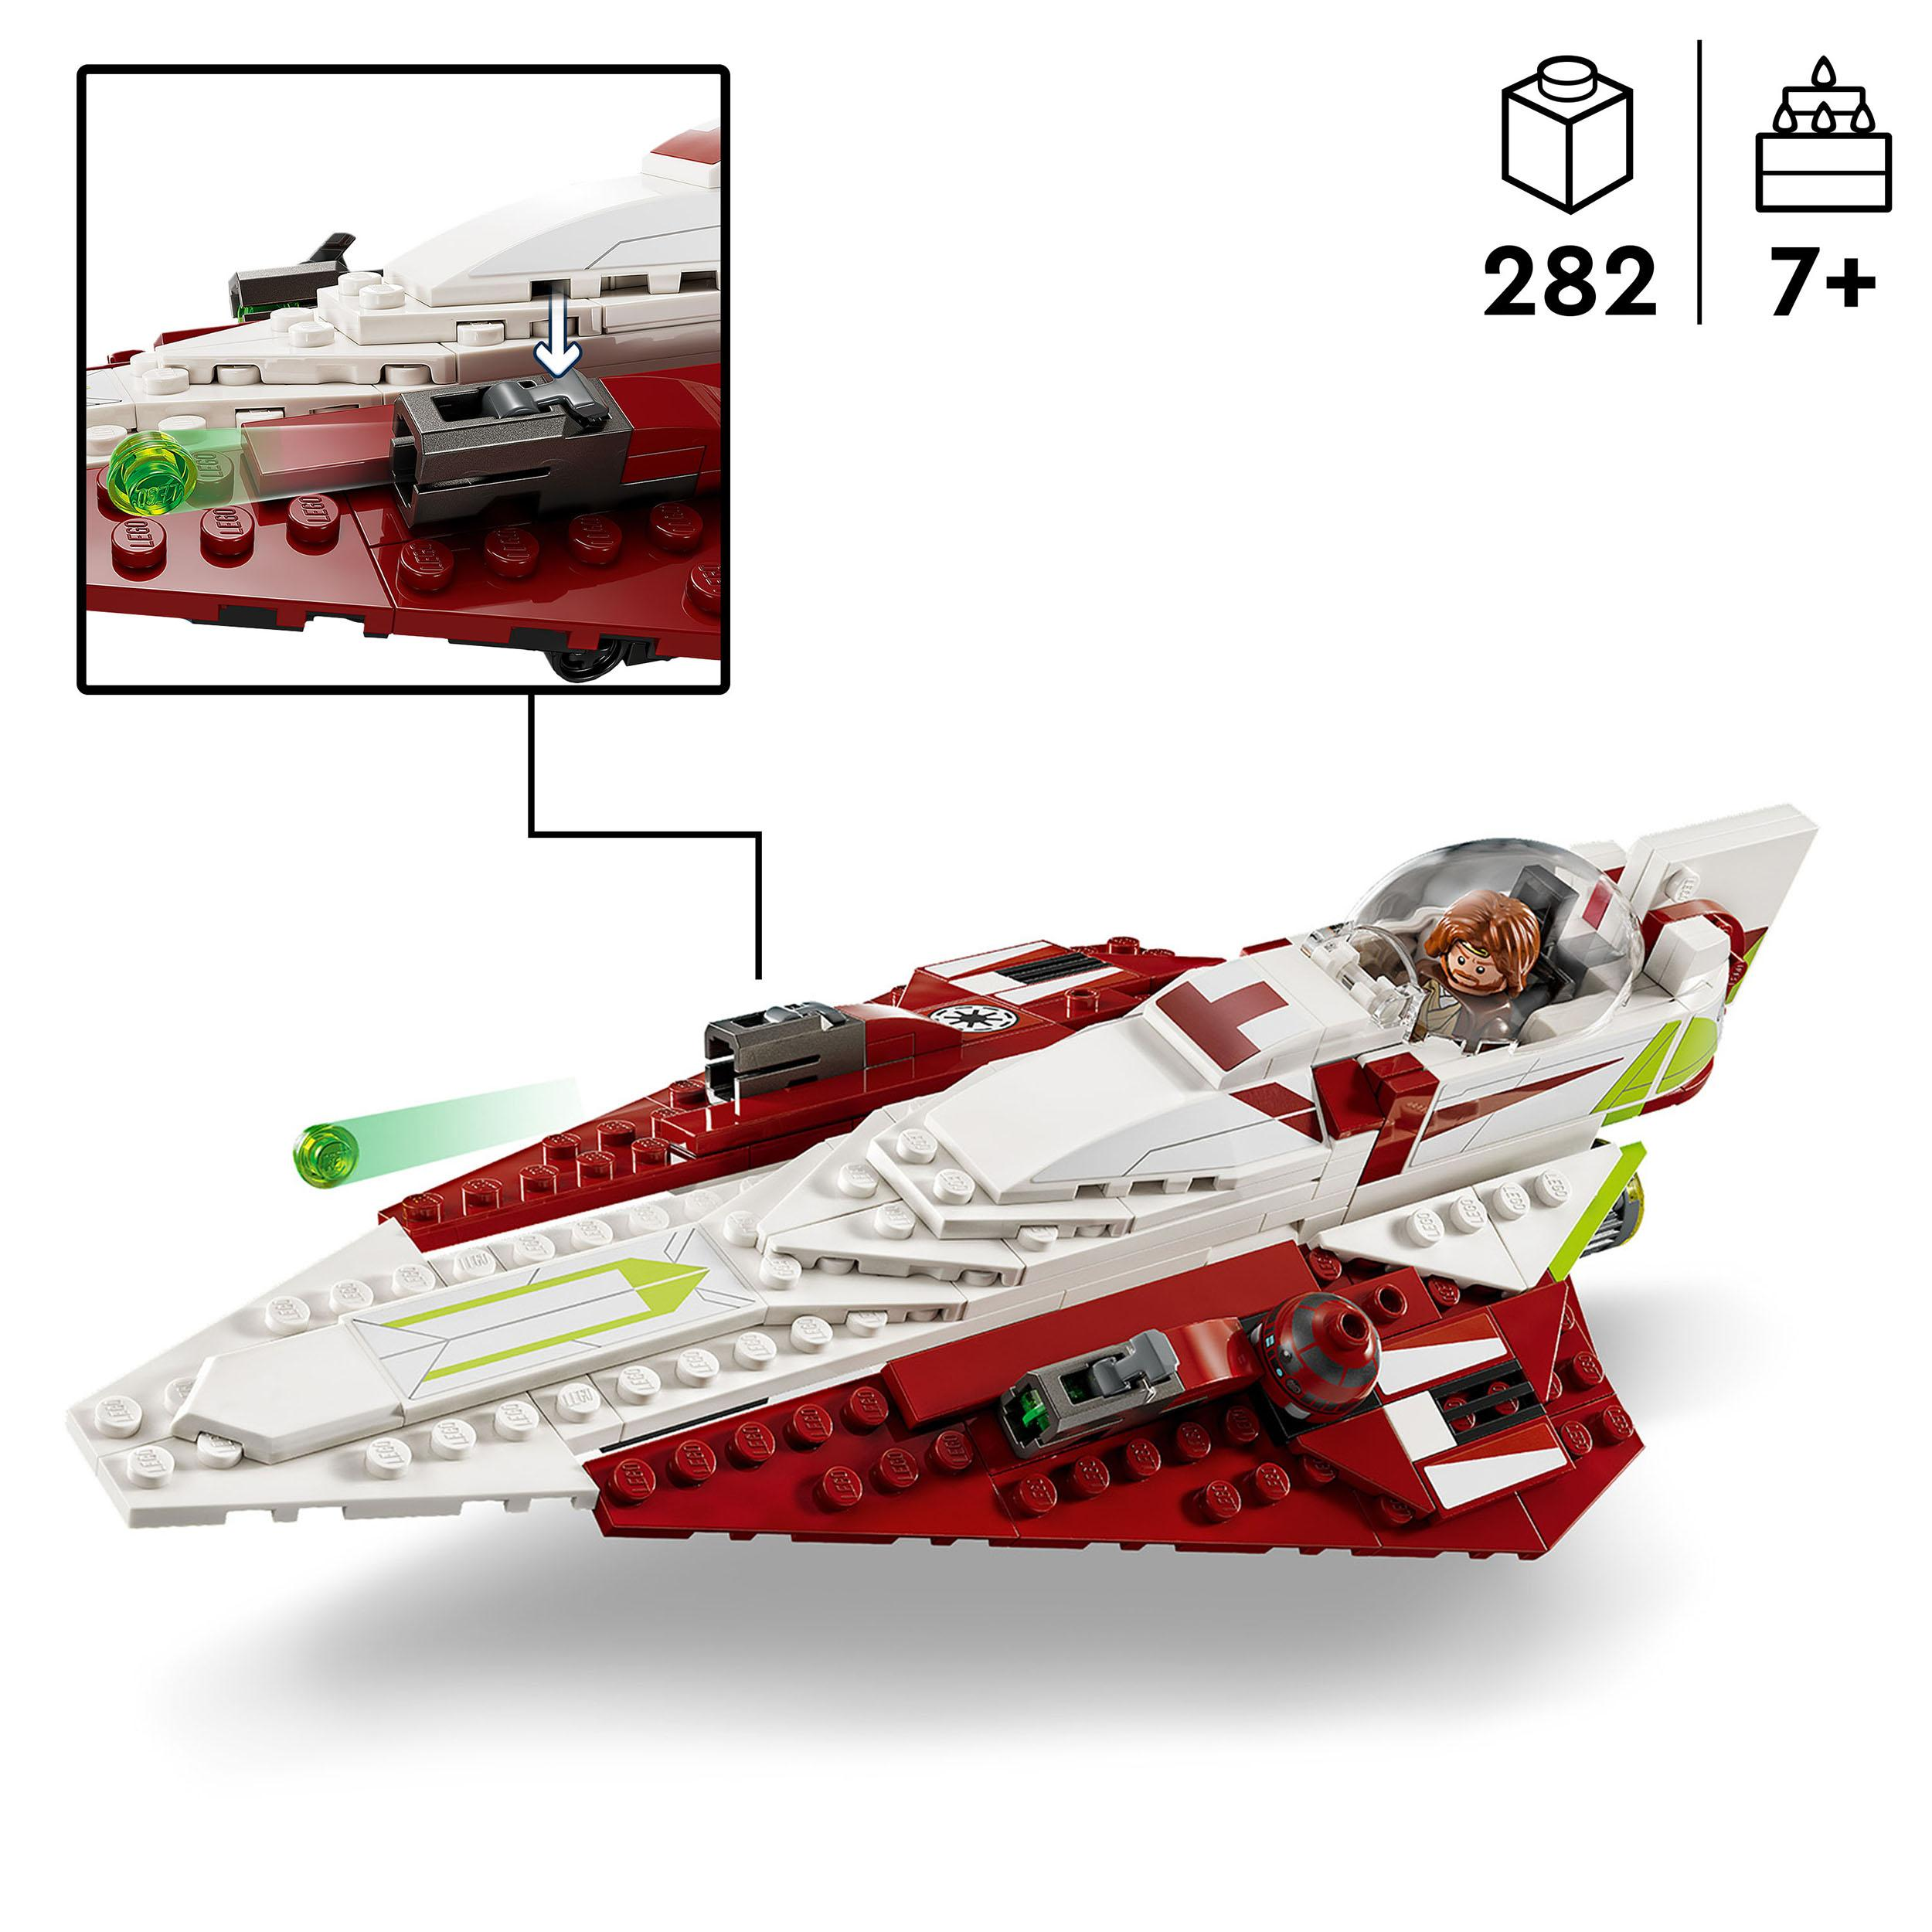 LEGO Star Obi-Wan Kenobis Wars Starfighter™ 75333 Jedi Bausatz, Mehrfarbig